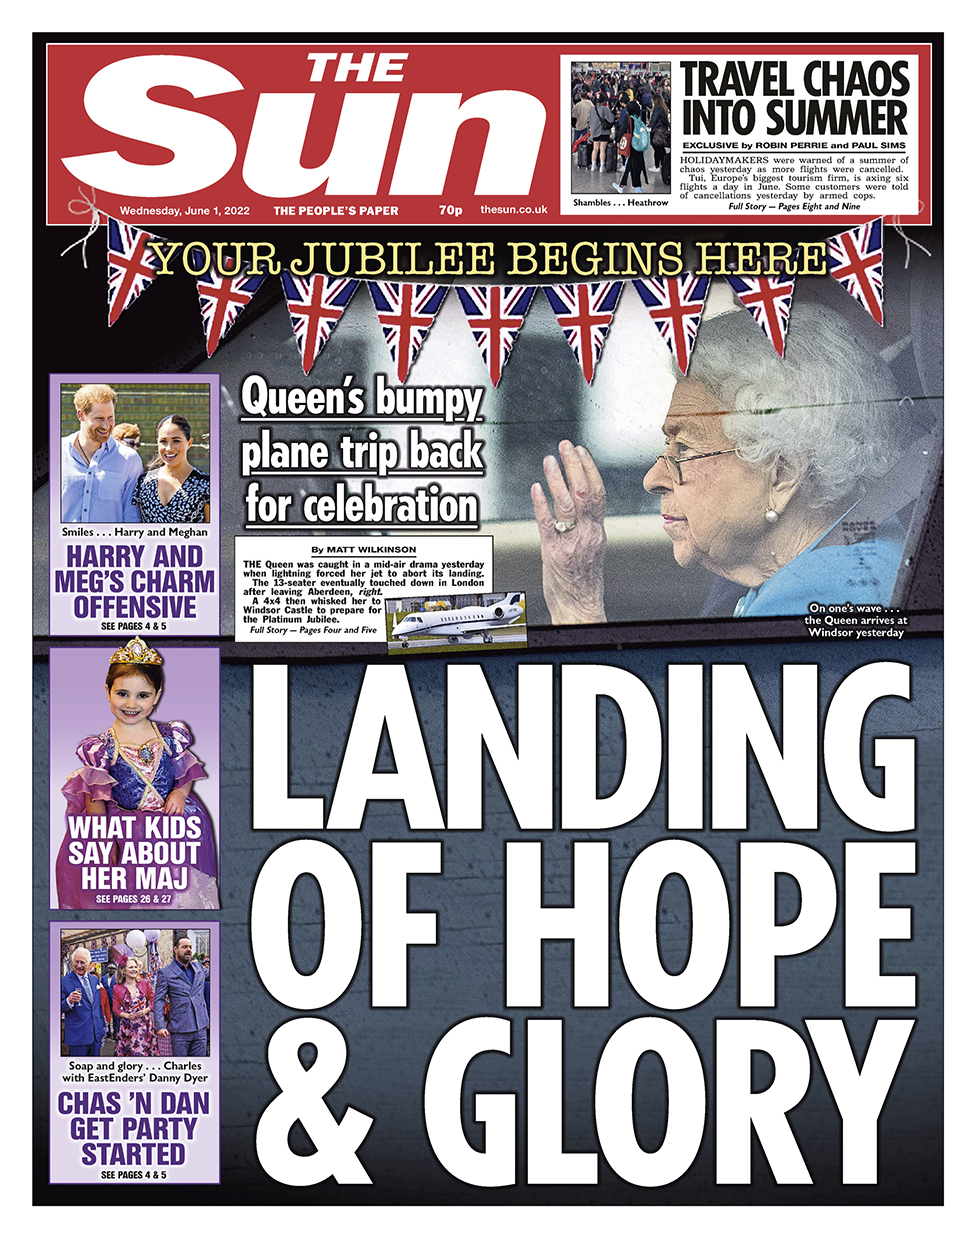 The headline in the Sun reads 'Landing of Hope & Glory'